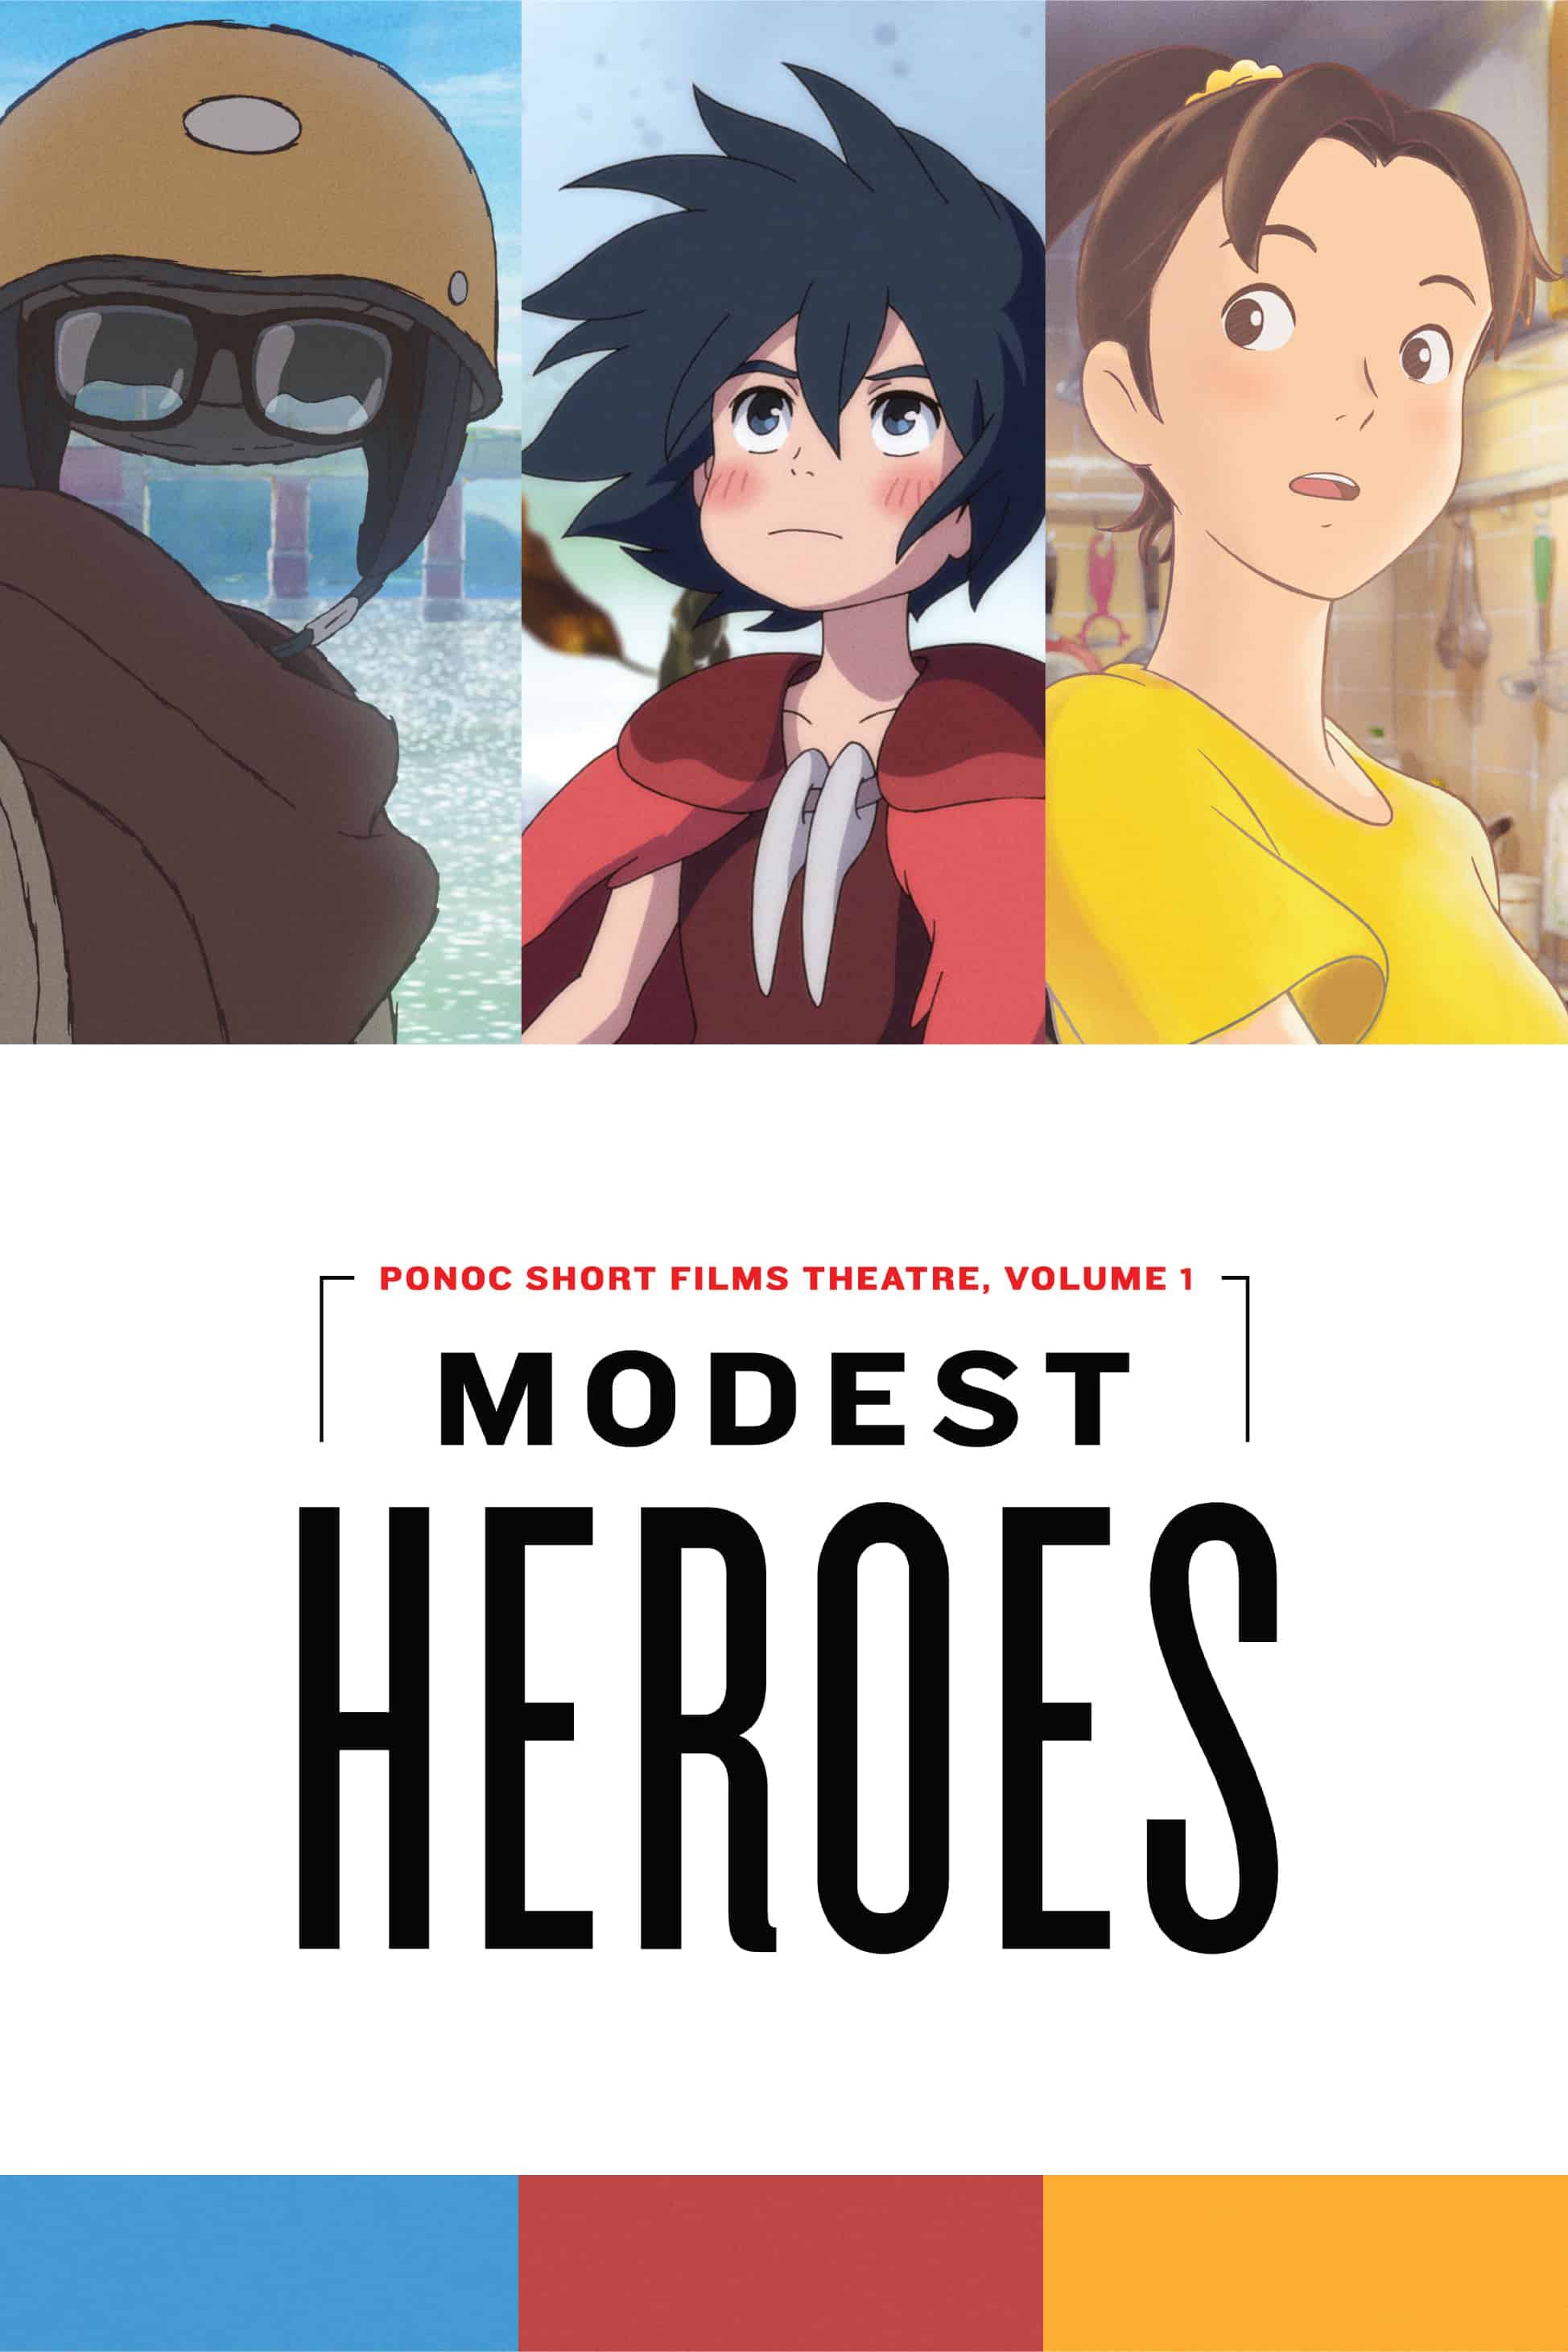 [Netflix] Modest Heroes - Ponoc Short Films Theatre ซับไทย